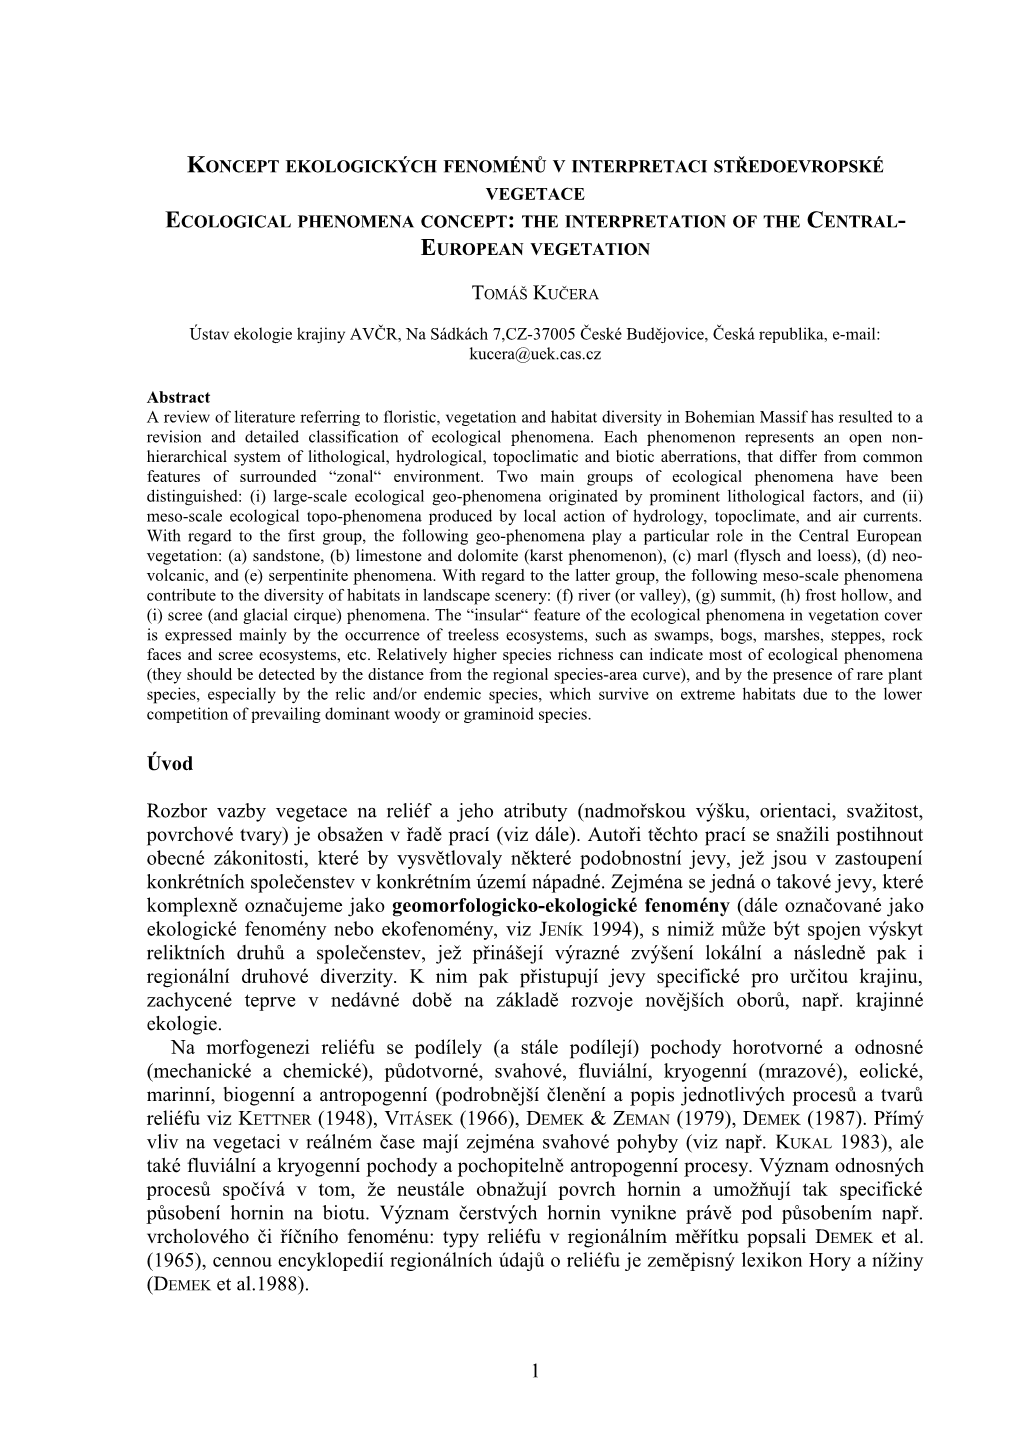 Ecological Phenomena Concept: the Interpretation of the Central-European Vegetation